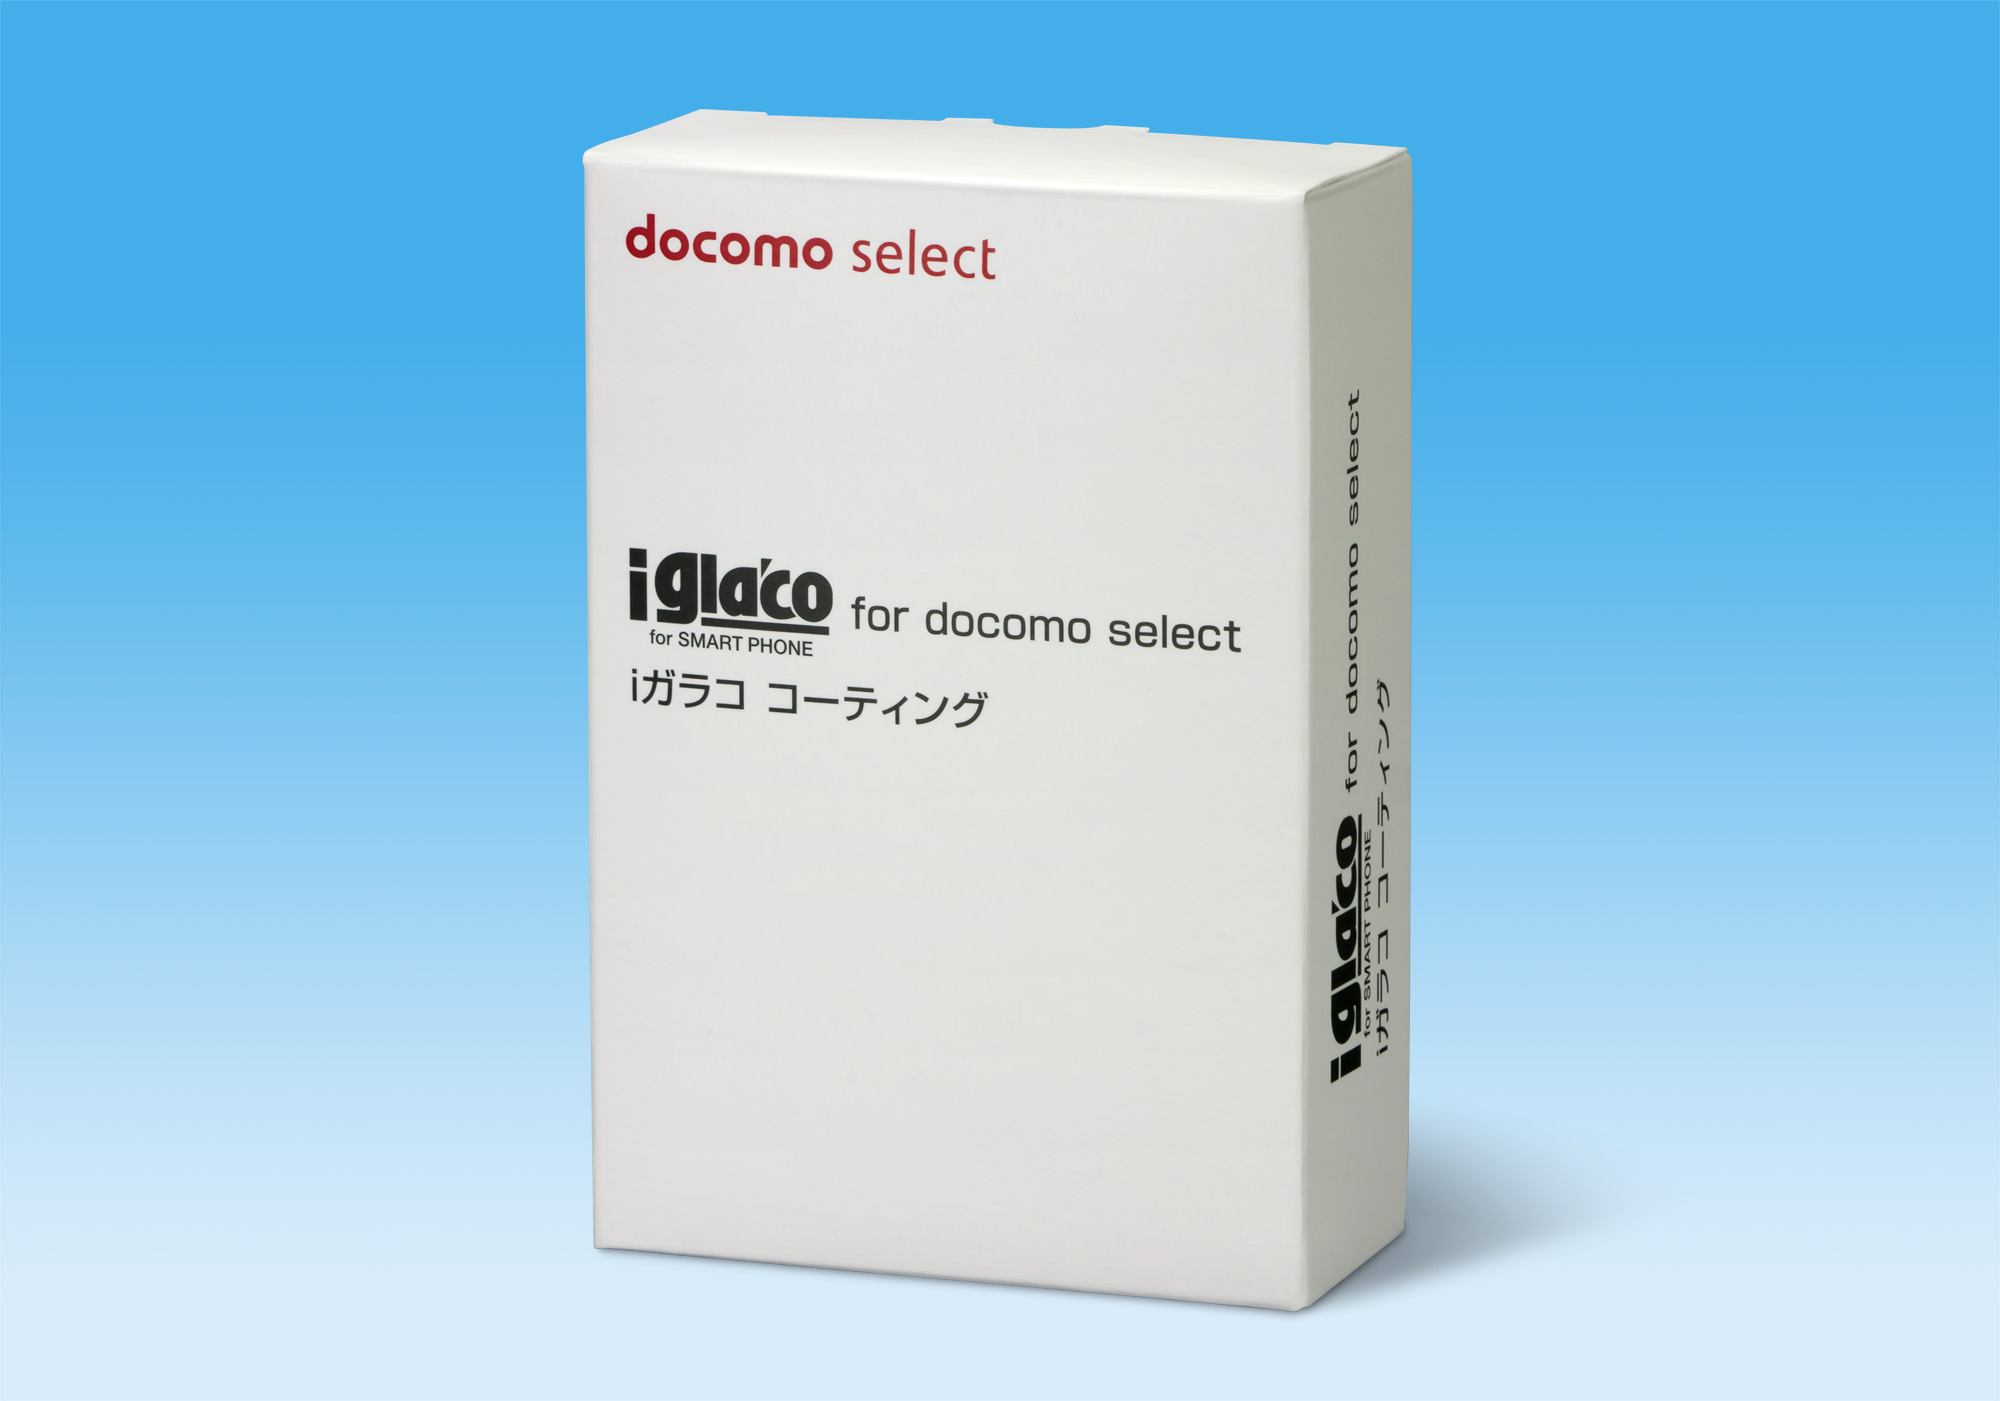 Iガラコ コーティング For Docomo 採用決定 株式会社ソフト99コーポレーションのプレスリリース